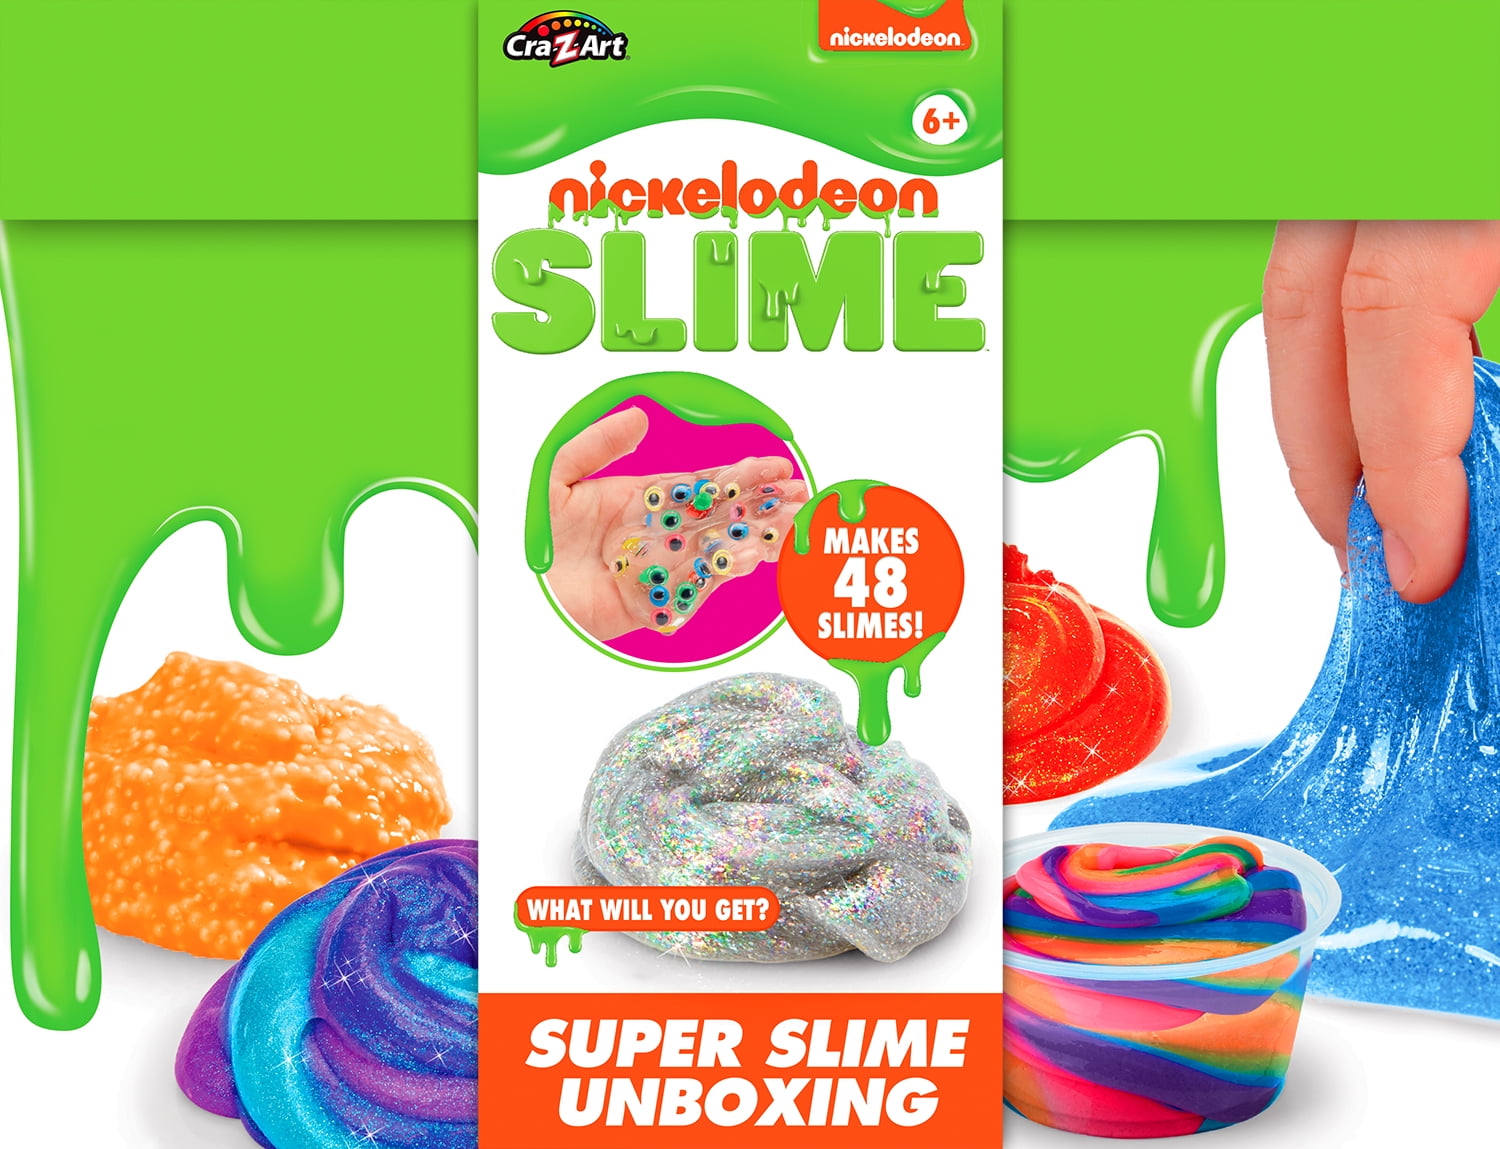 Nickelodeon Super Slime Studio by Cra-Z-Art 